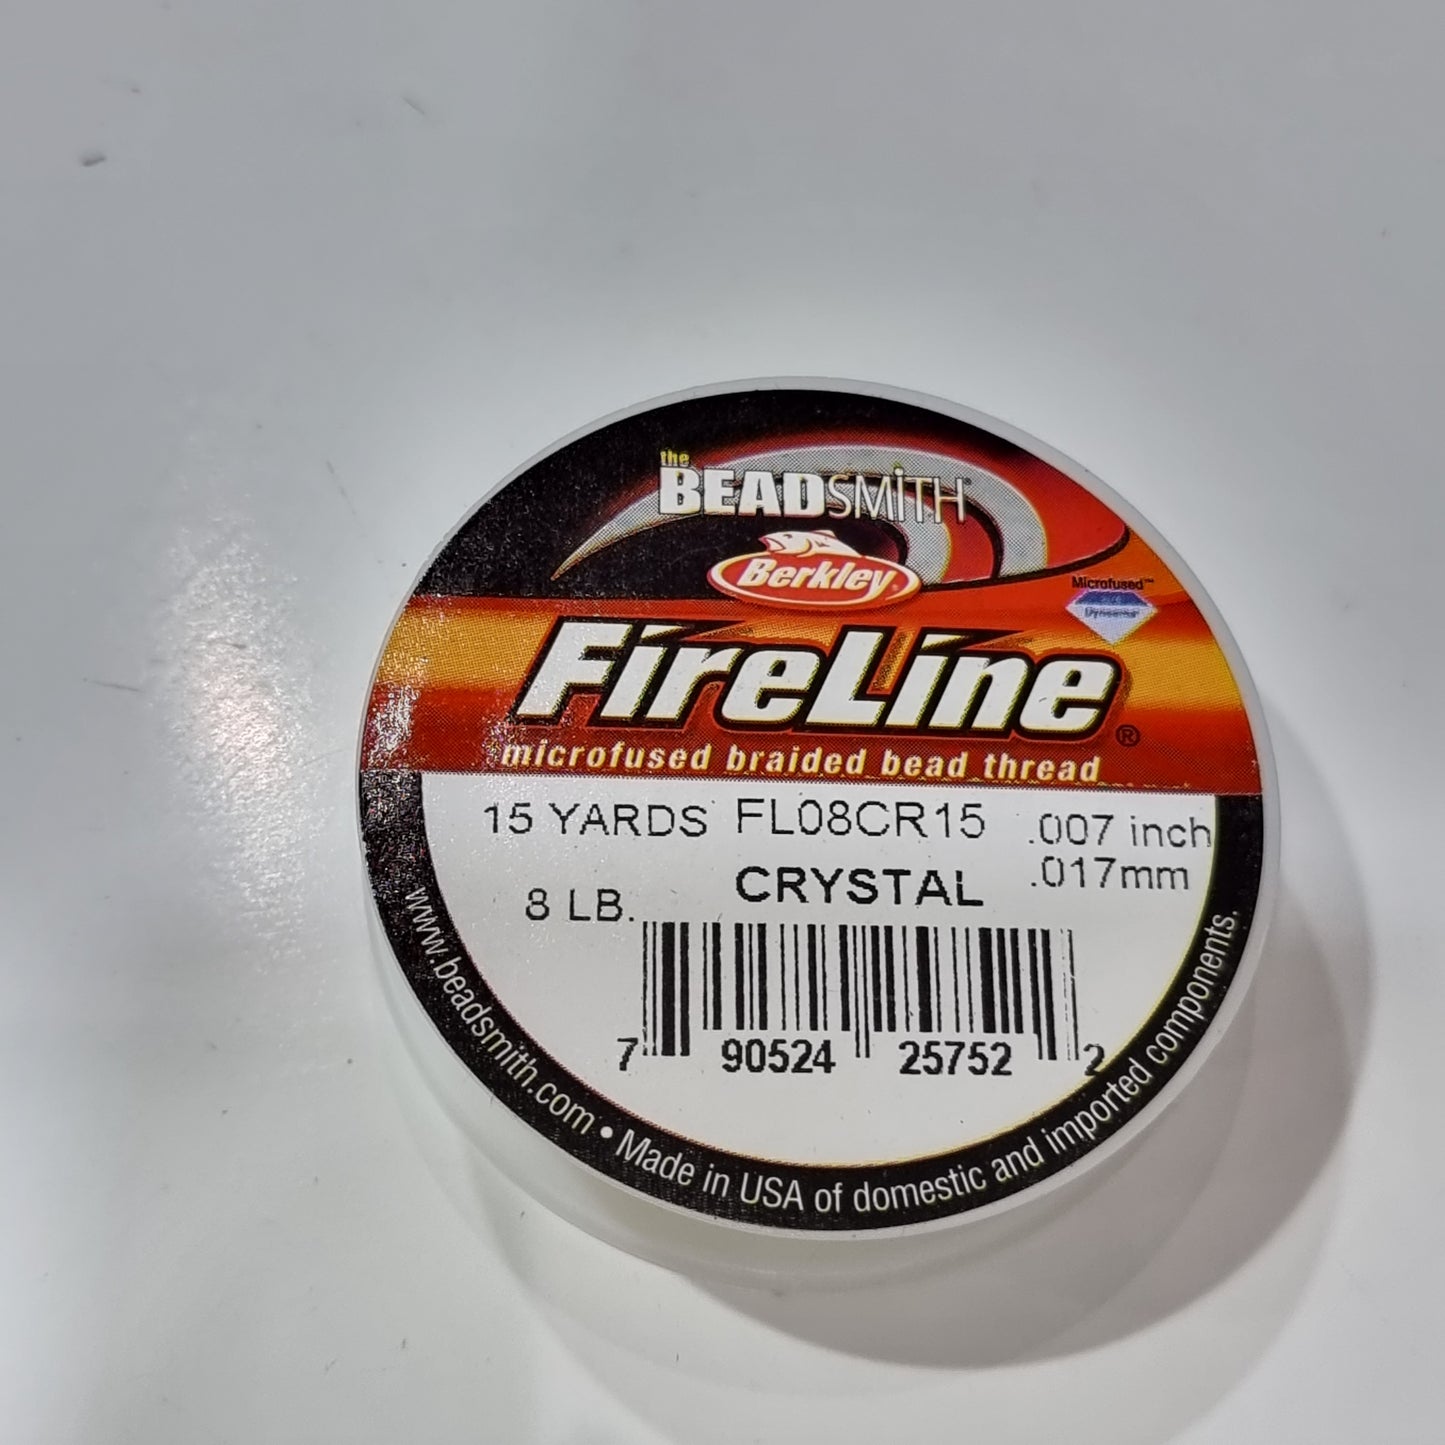 8lb Fireline Crystal Thread 15 Yards